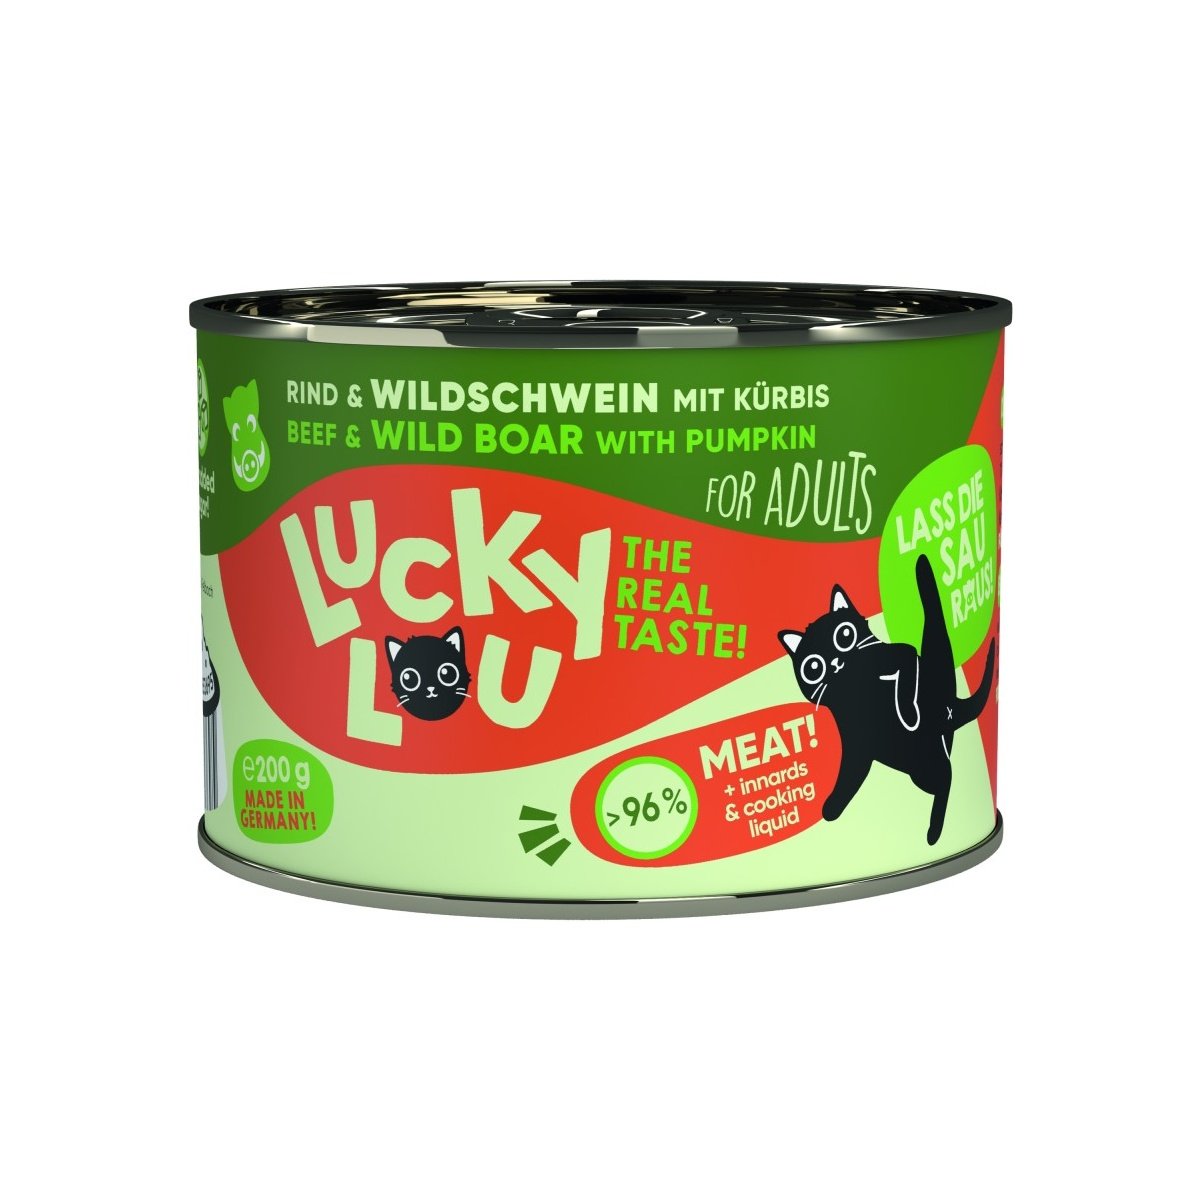 Lucky Lou Lifestage Adult Rind + Wildschwein - zoo.de